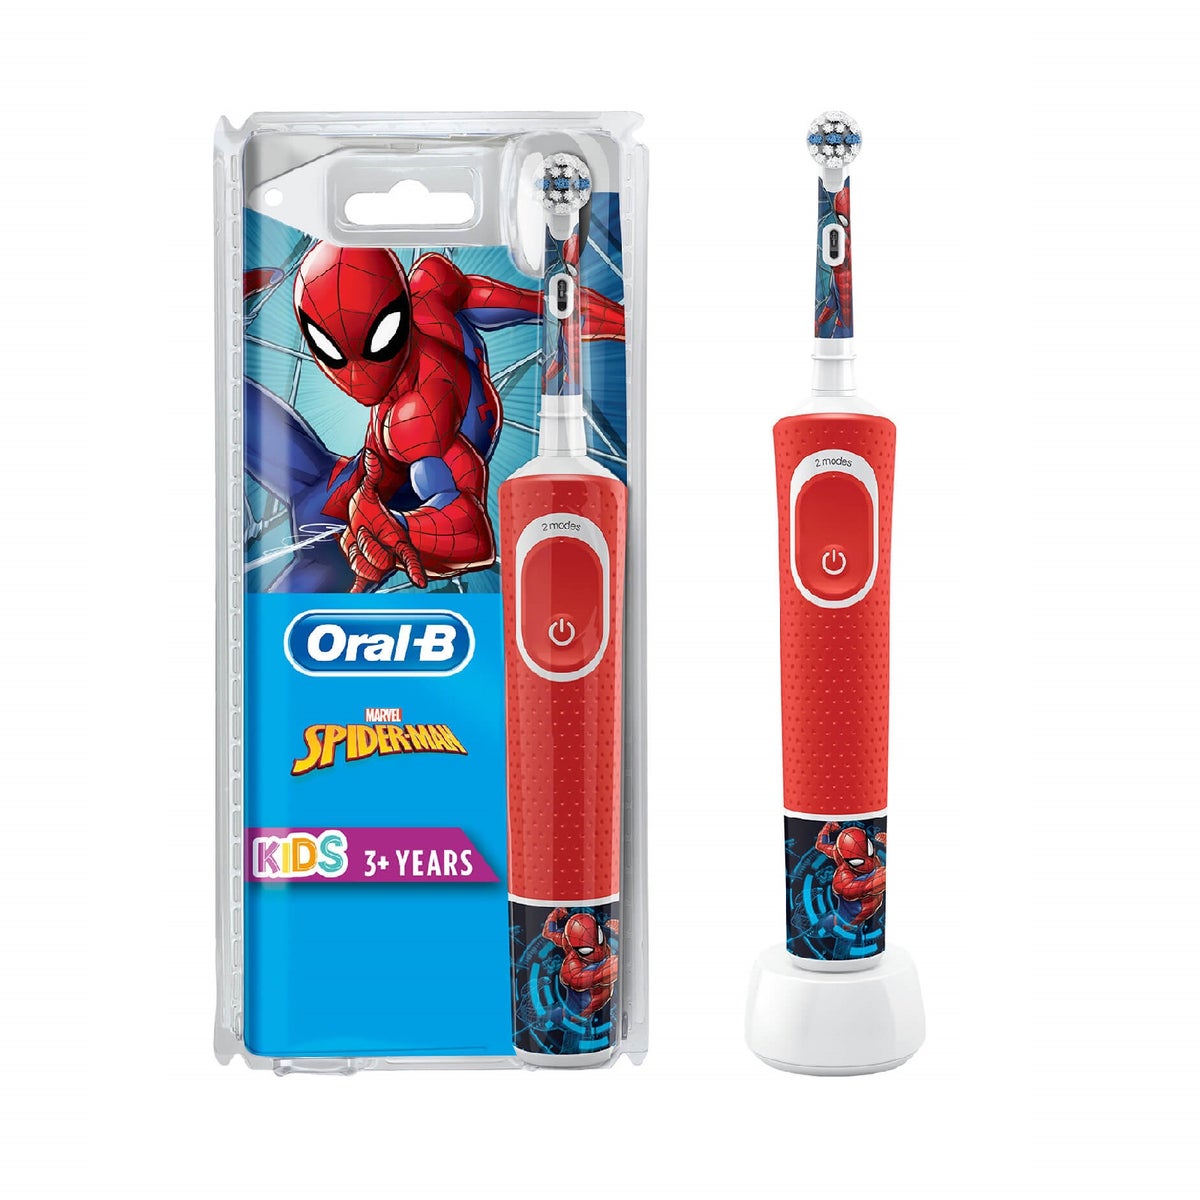 Oral-B Kids Spiderman Toothbrush